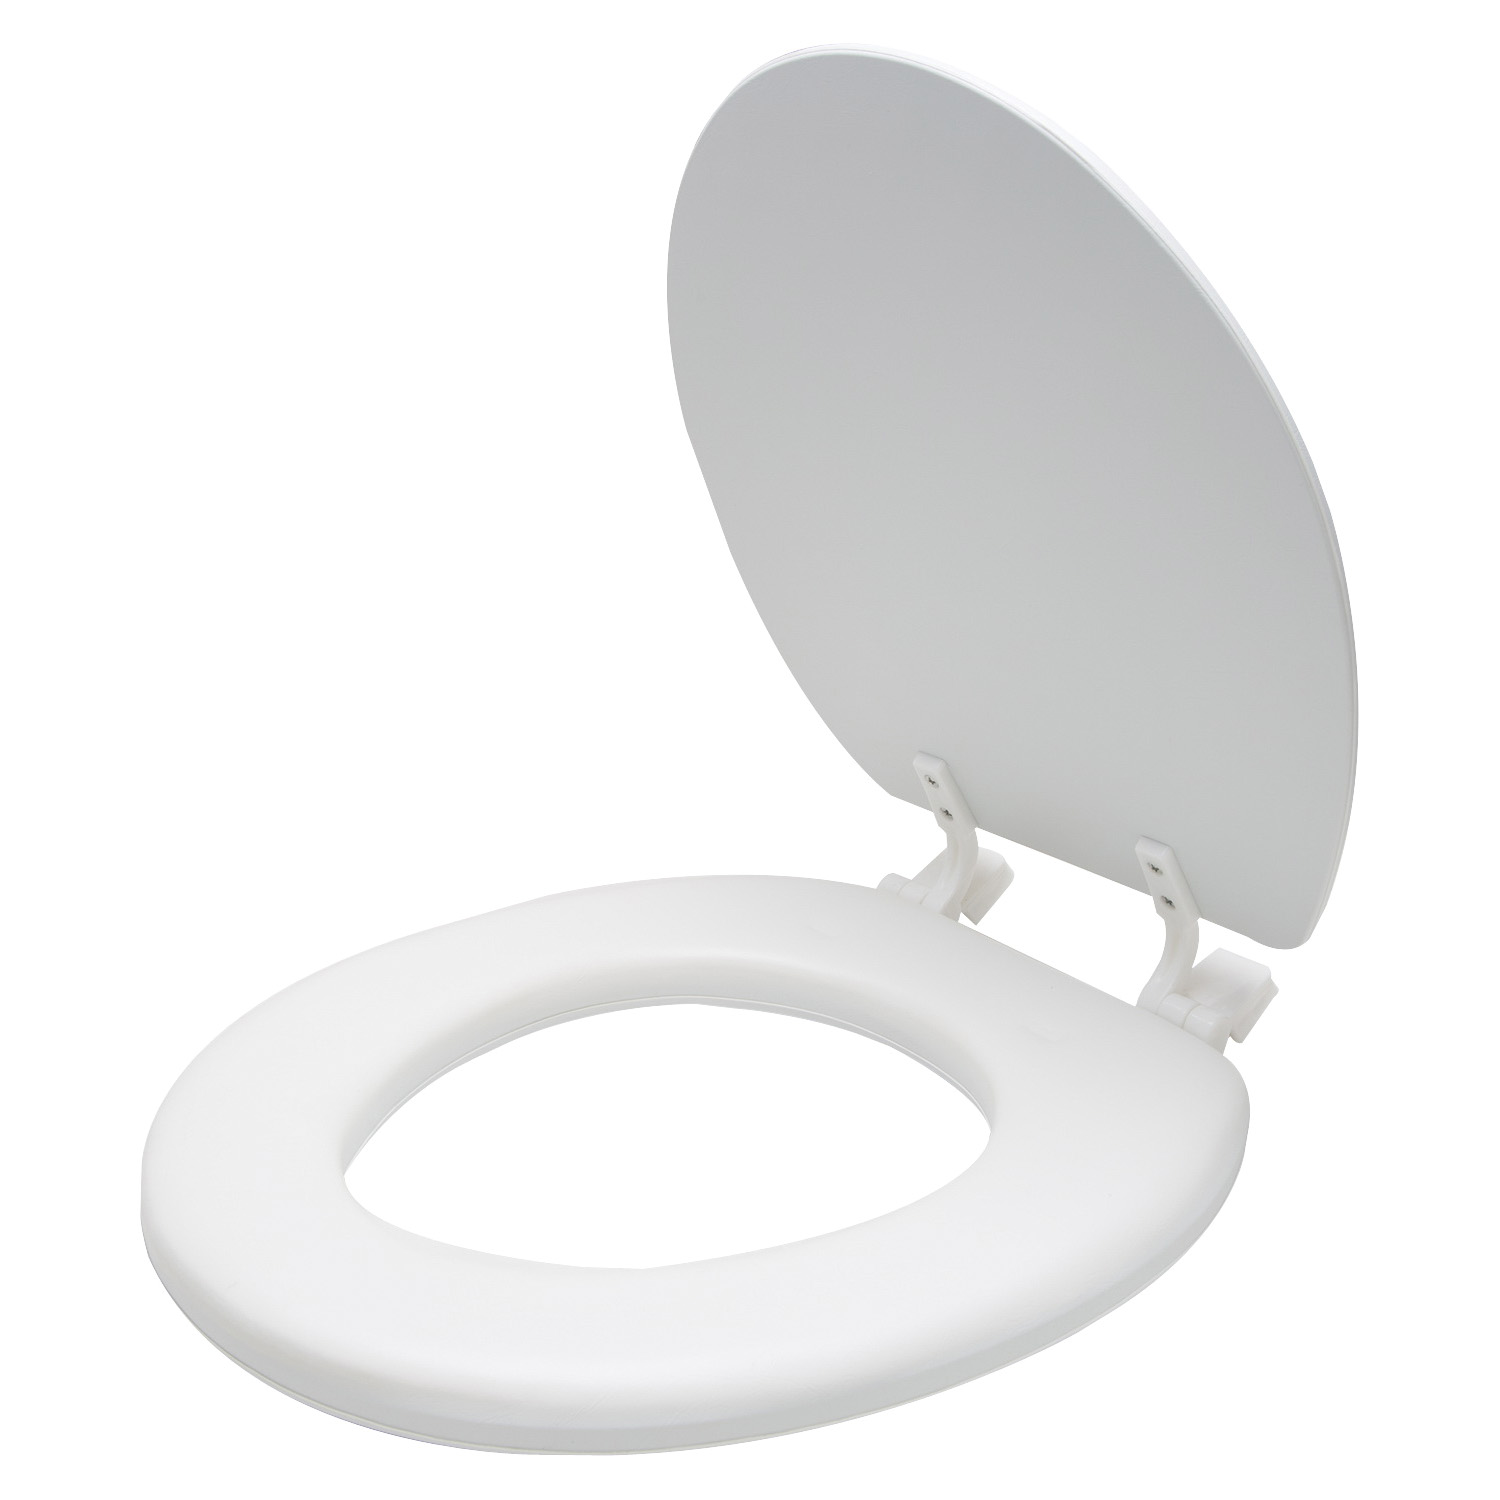 S001-WH Toilet Seat, Round, PP, White, Plastic Hinge